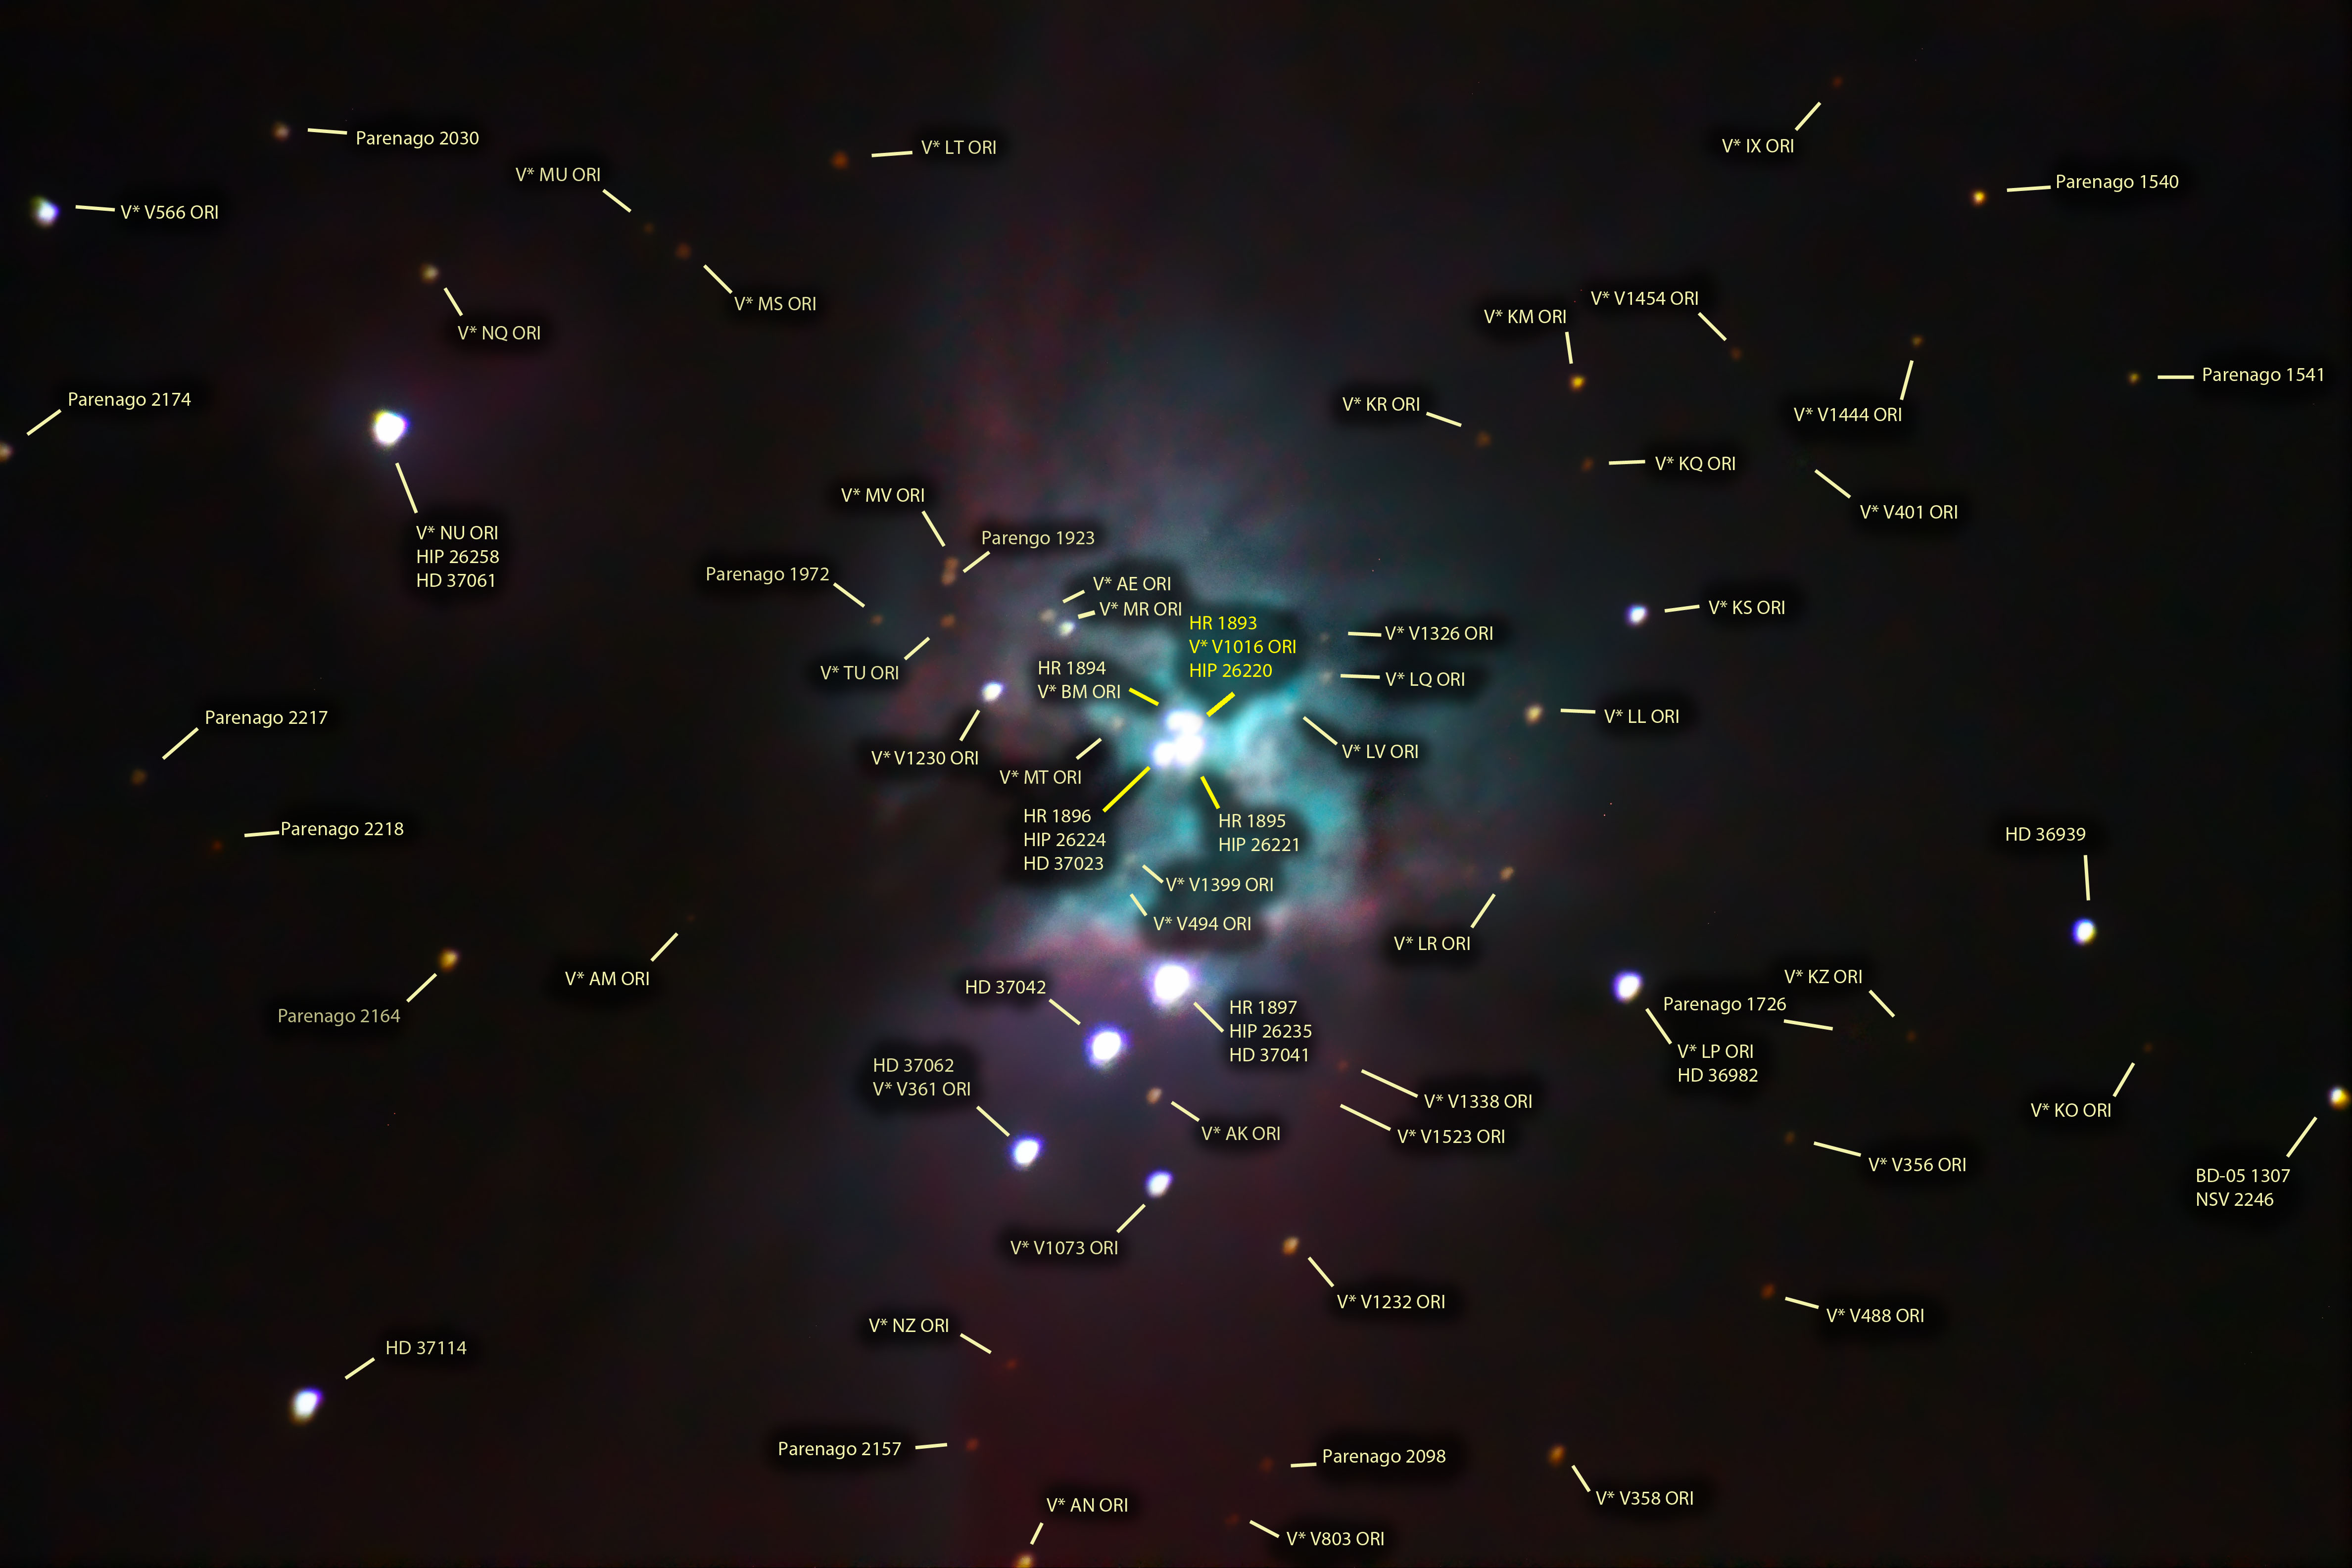 Orion Trapezium Chart